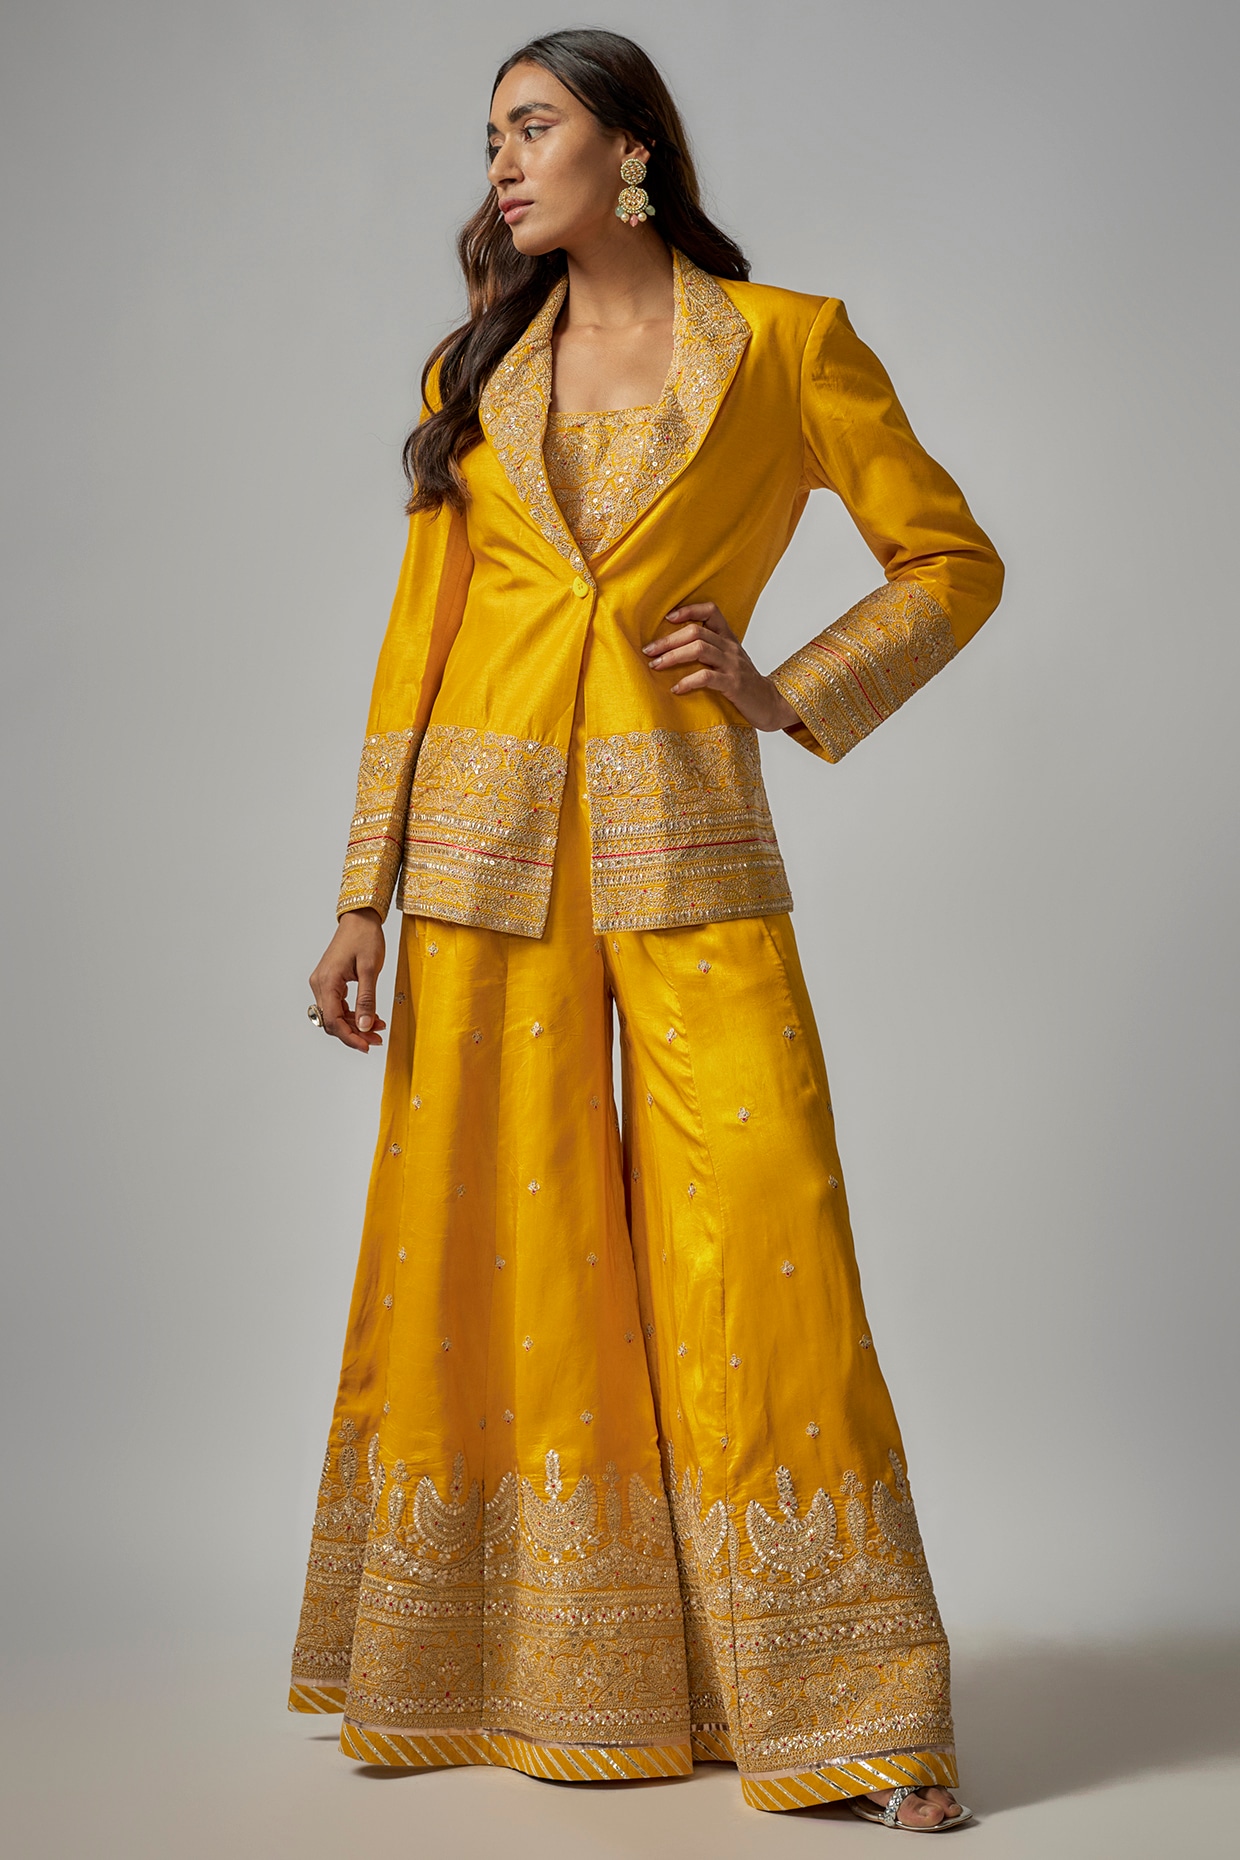 Stylish Haldi Special Yellow Sharara Suit | Ethnicroop